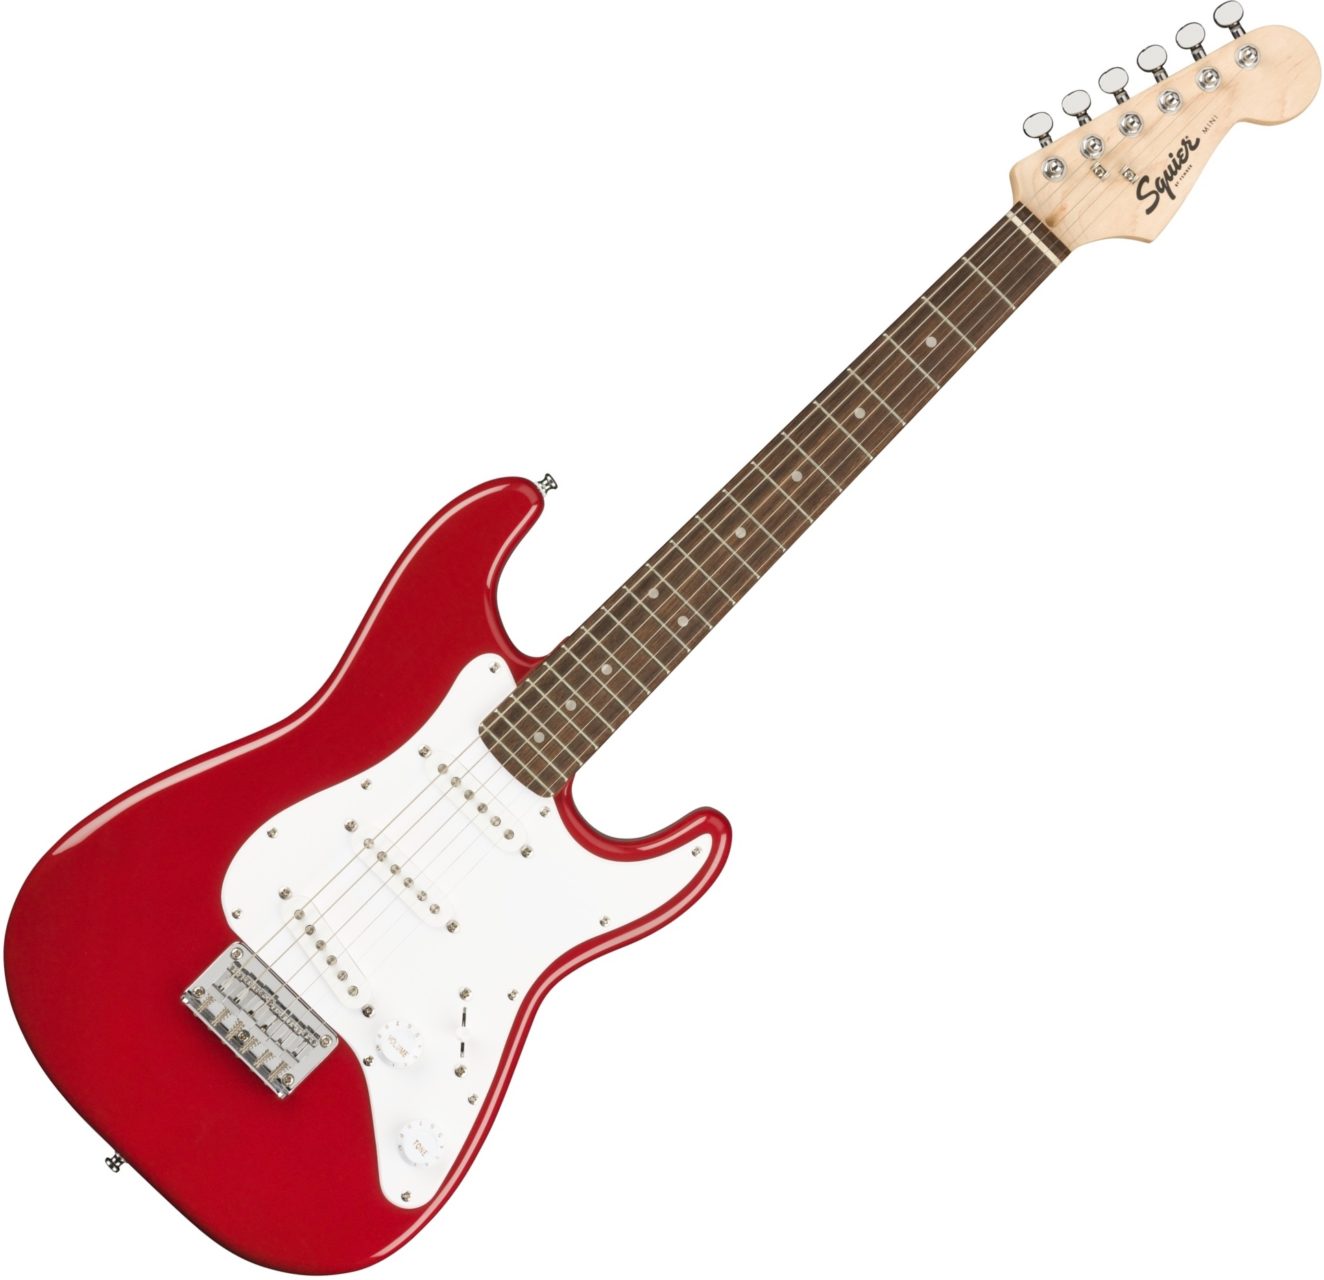 Squier Mini Stratocaster Dakota red